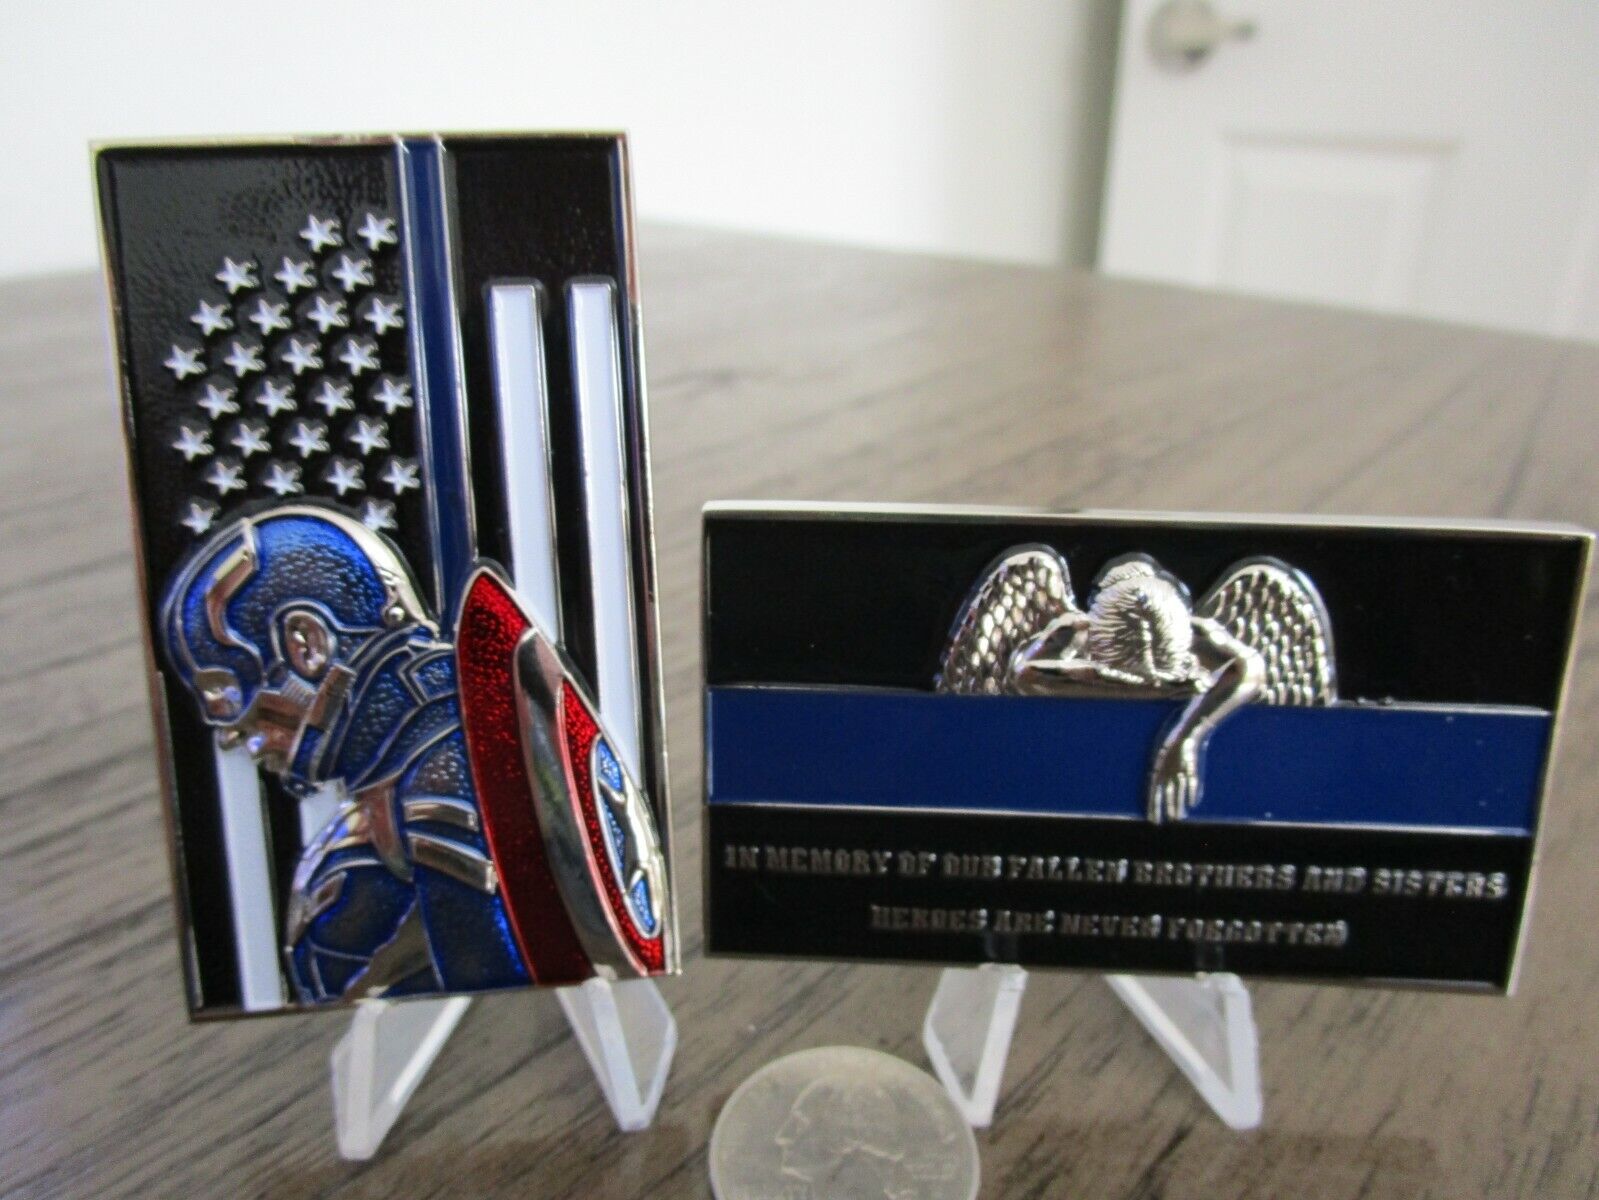 Captain America Avengers Thin Blue Line Law Enforcement Police Challenge Coin